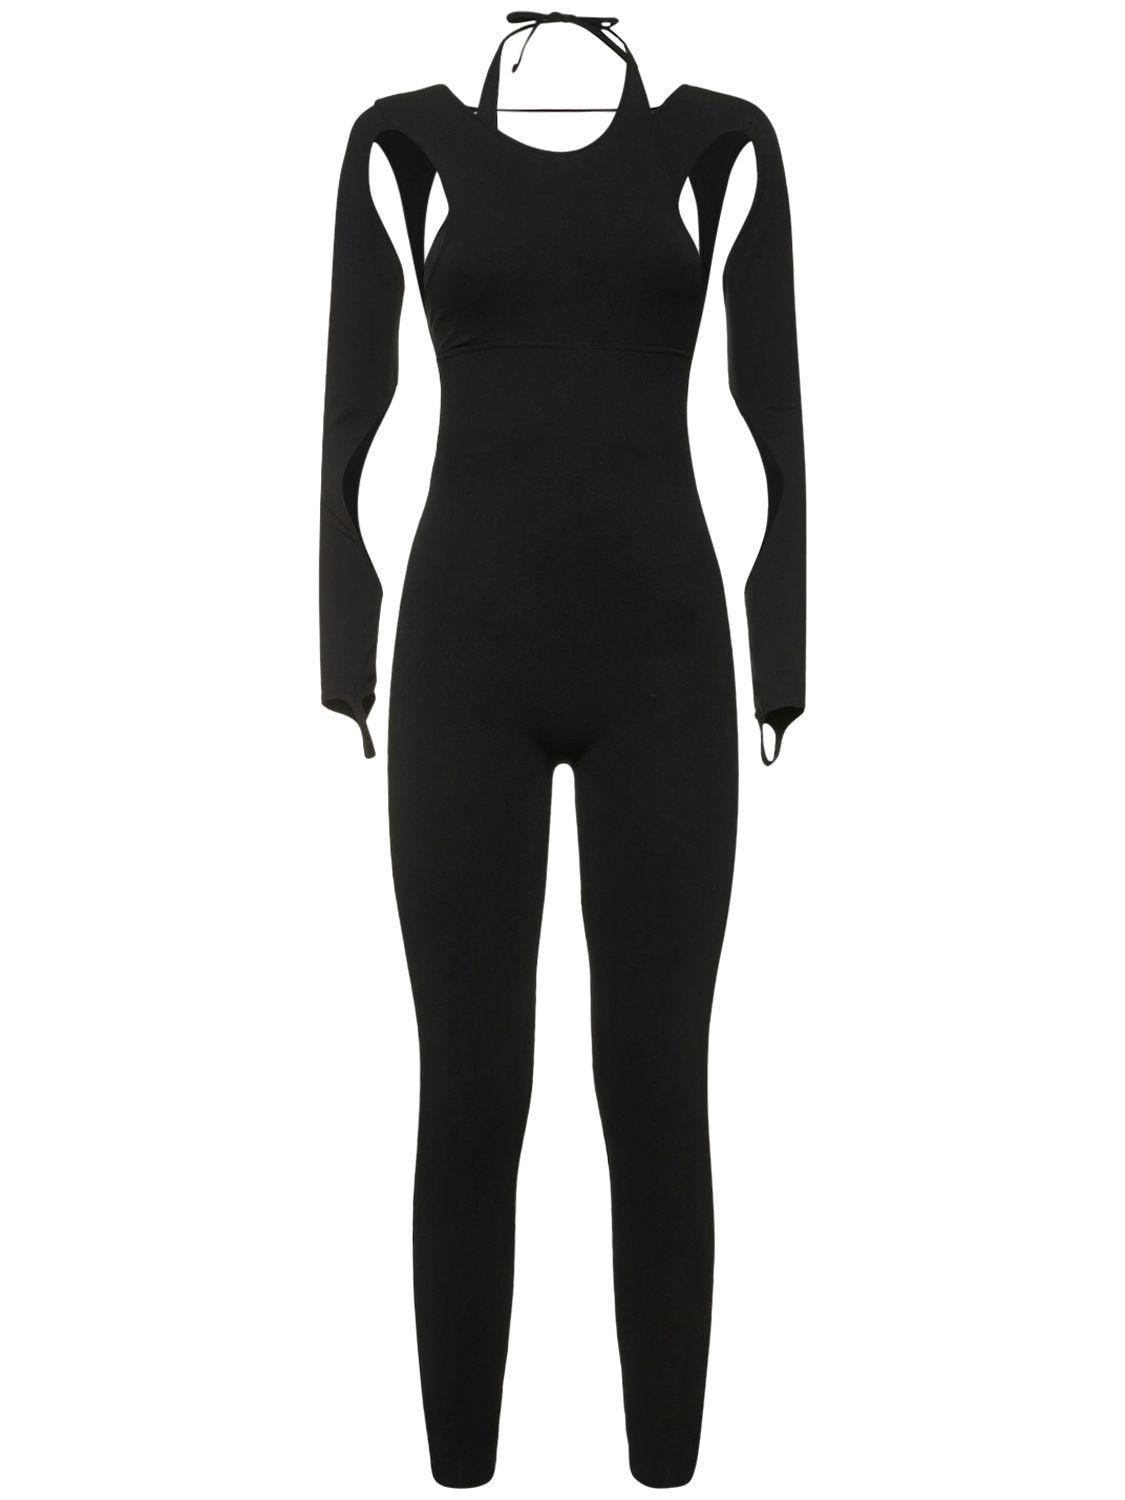 ANDREADAMO Sculpting Jersey Jumpsuit W/ Cutouts in Black | Lyst